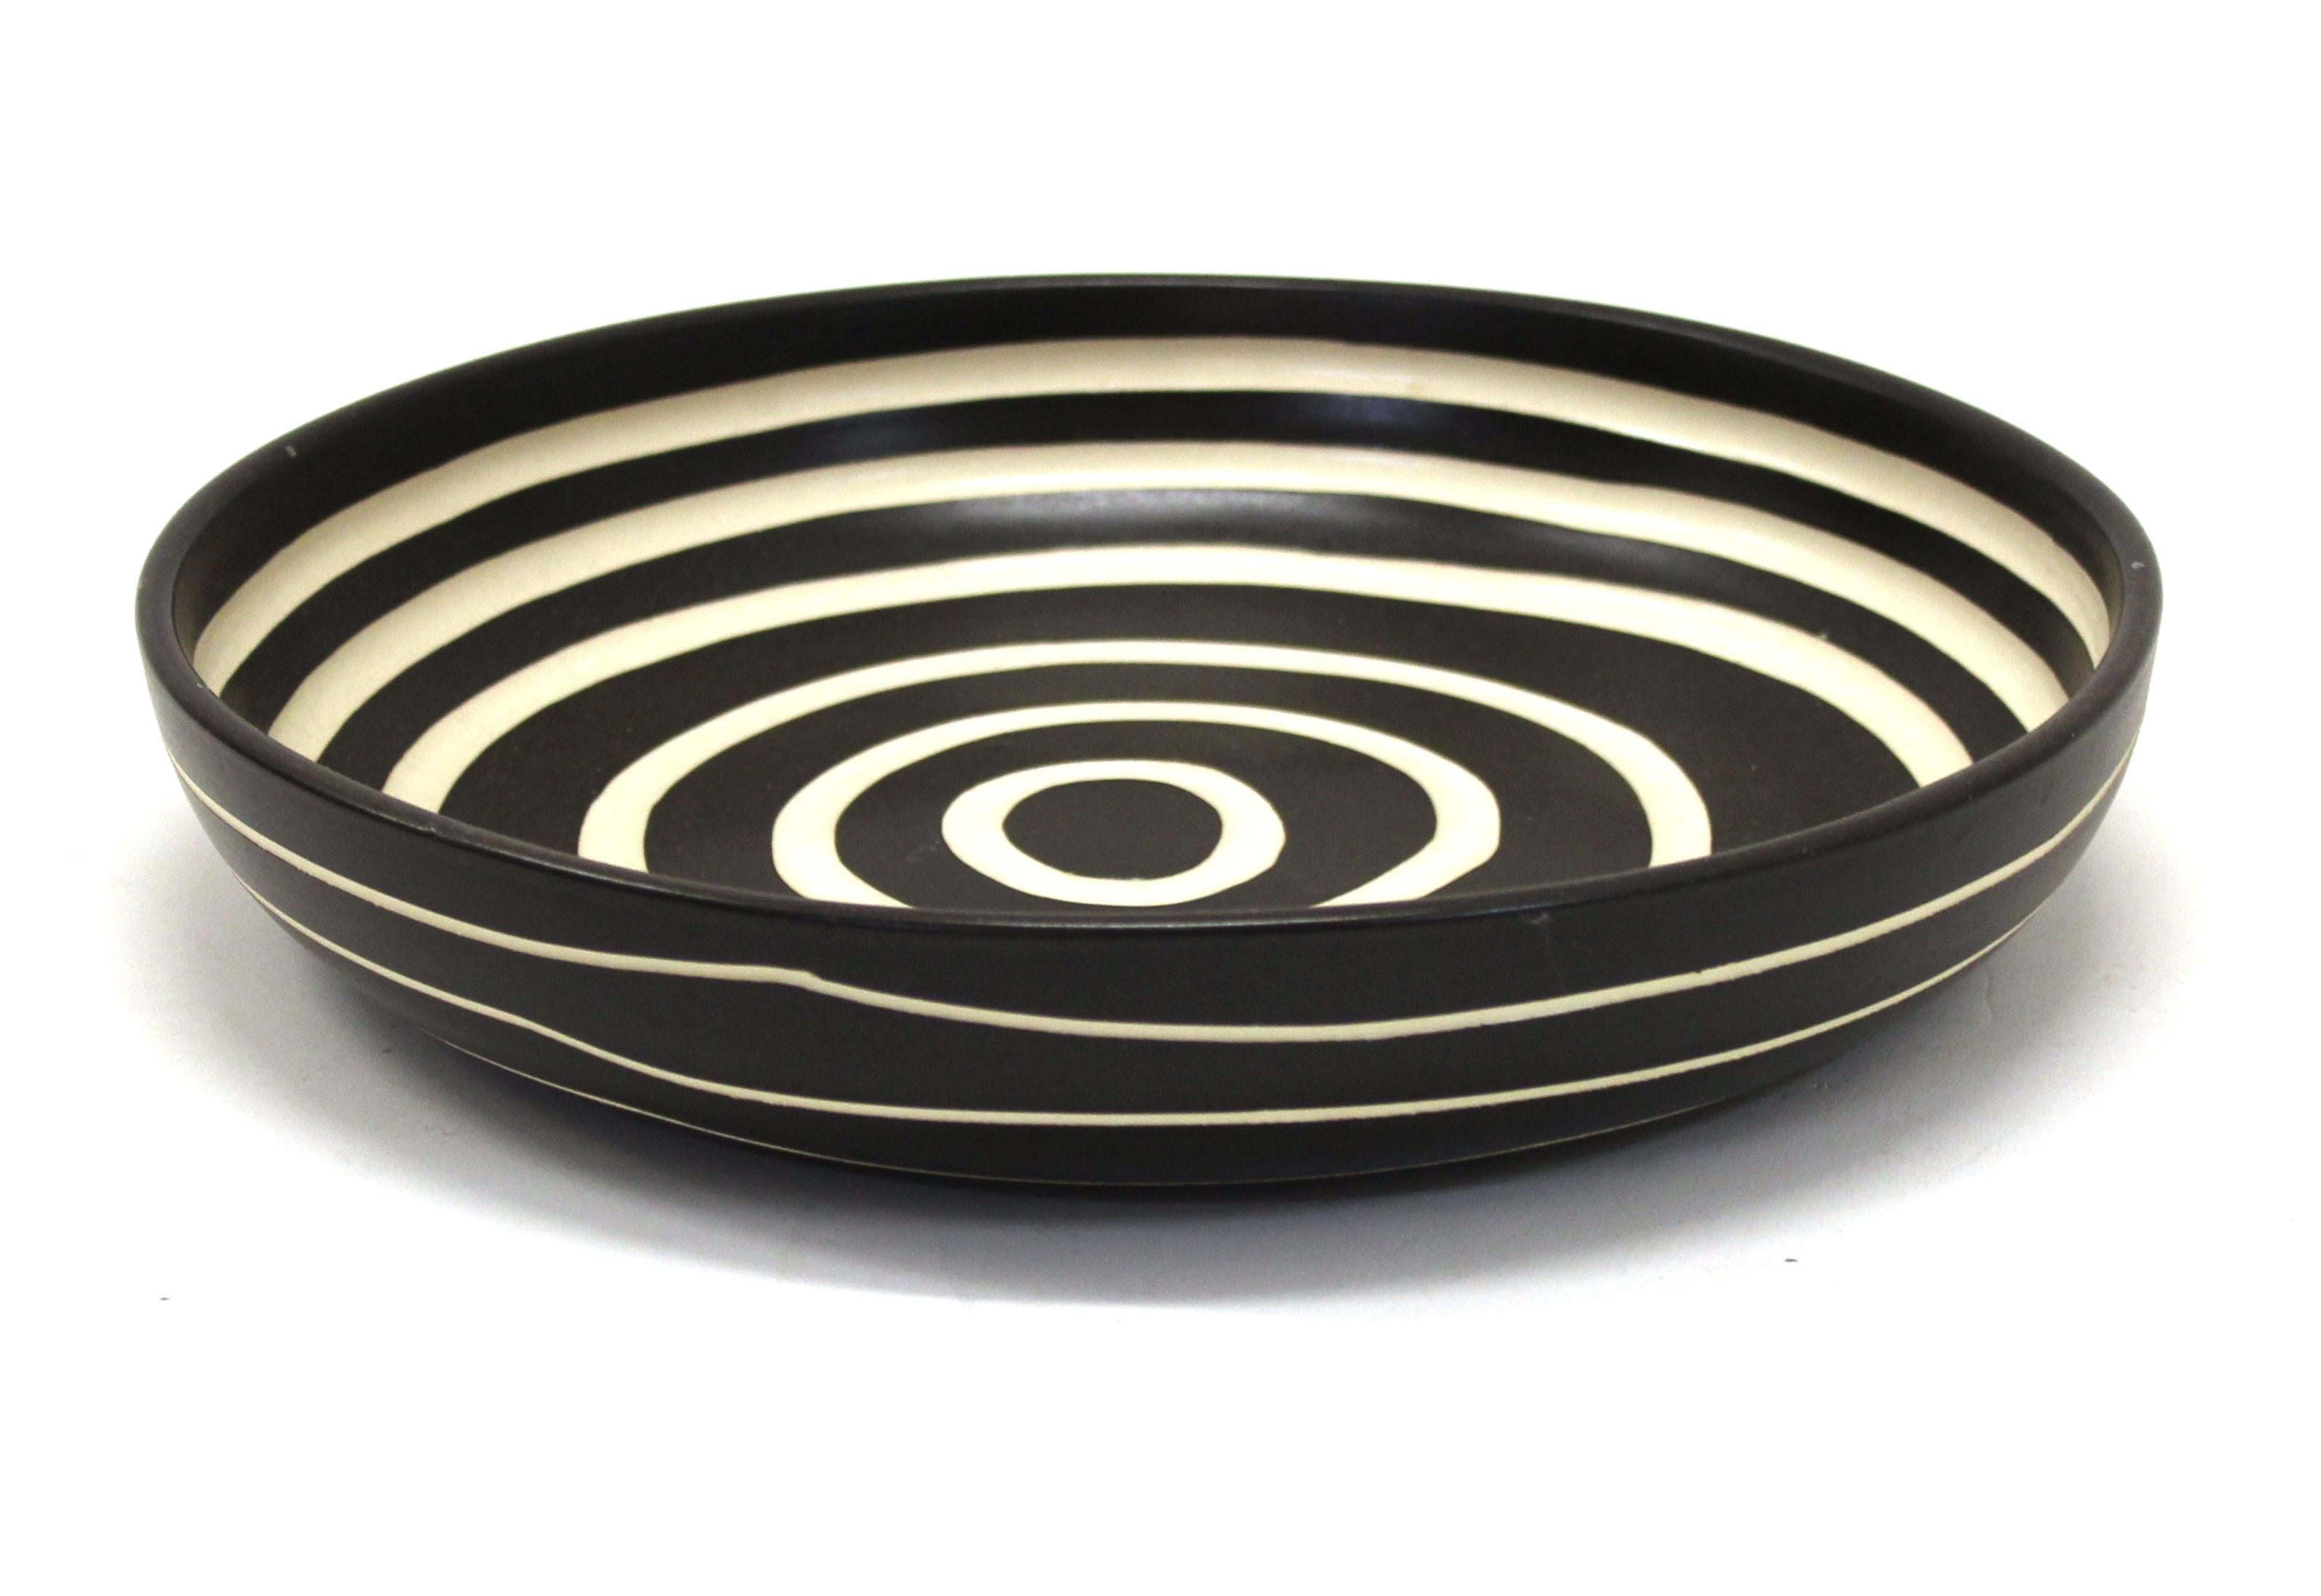 Post-Modern Postmodern Studio Pottery Charger Plate